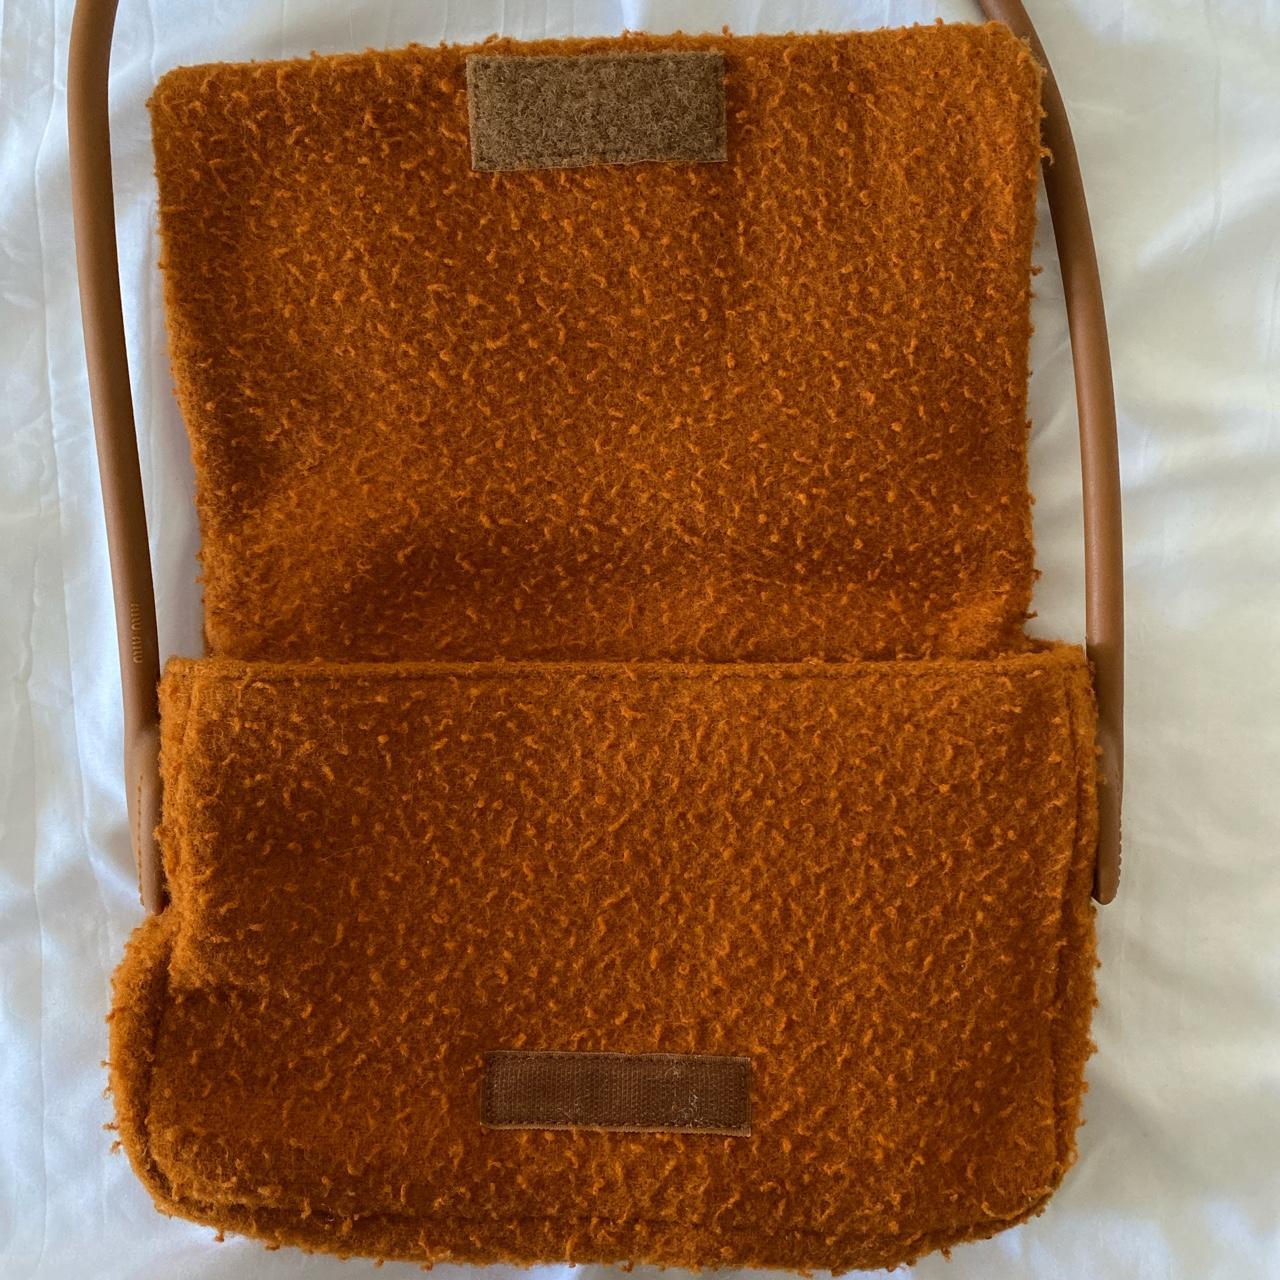 Rare Miu Miu 1999 Shoulder Bag Very good condition - Depop